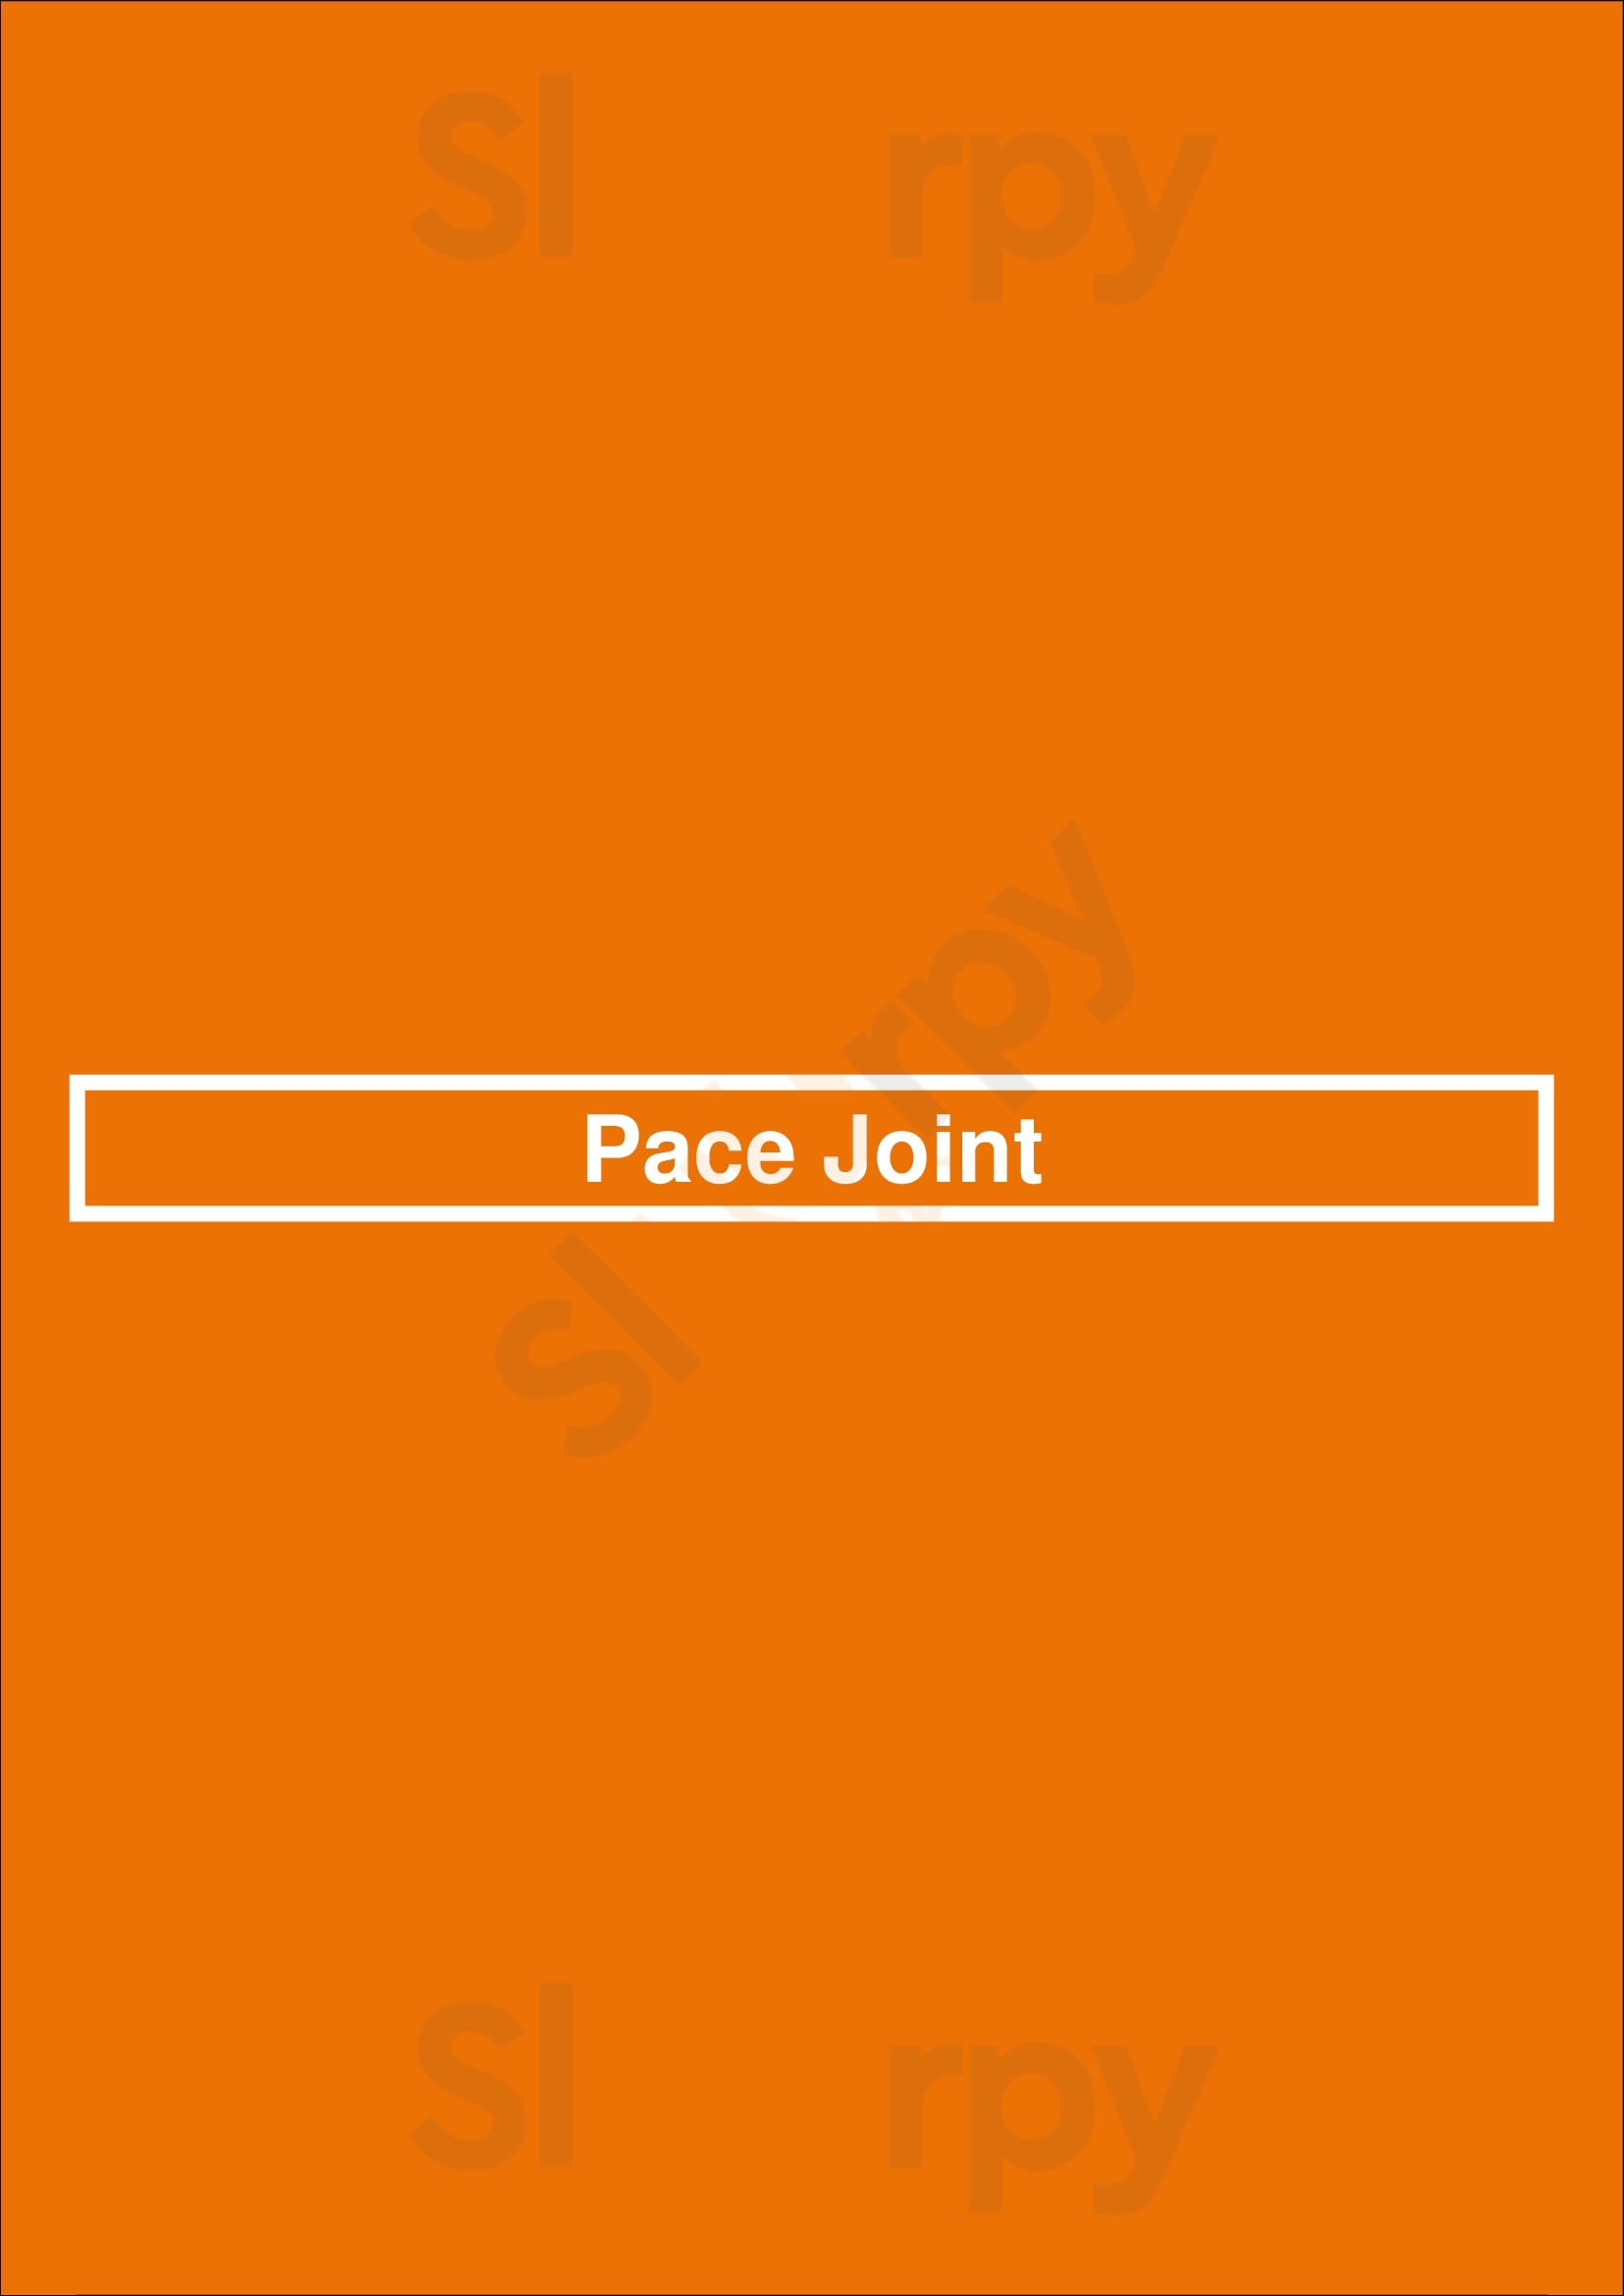 Pace Joint Los Angeles Menu - 1